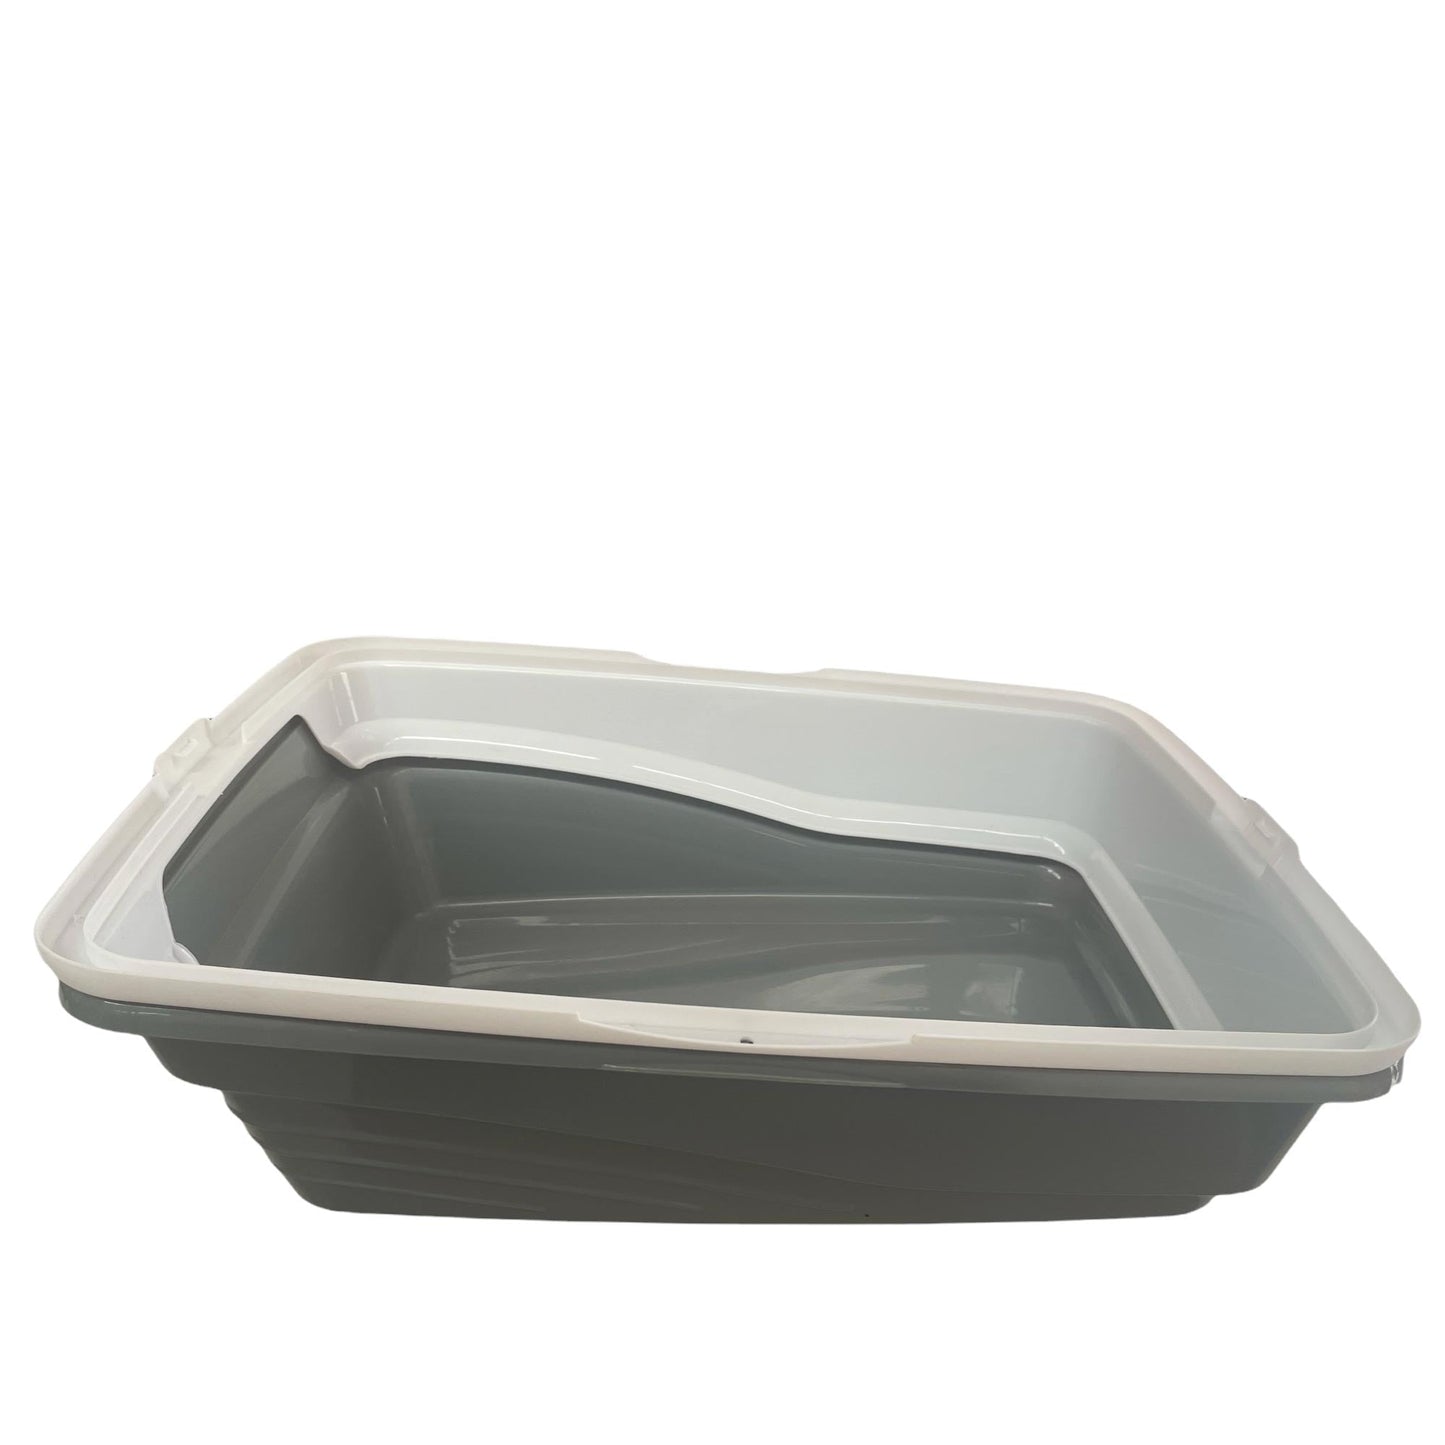 Cat Litter Tray Plastic 48x38.5x12cm Non Spill Mess Guard Rim Grey White Kitty Pan